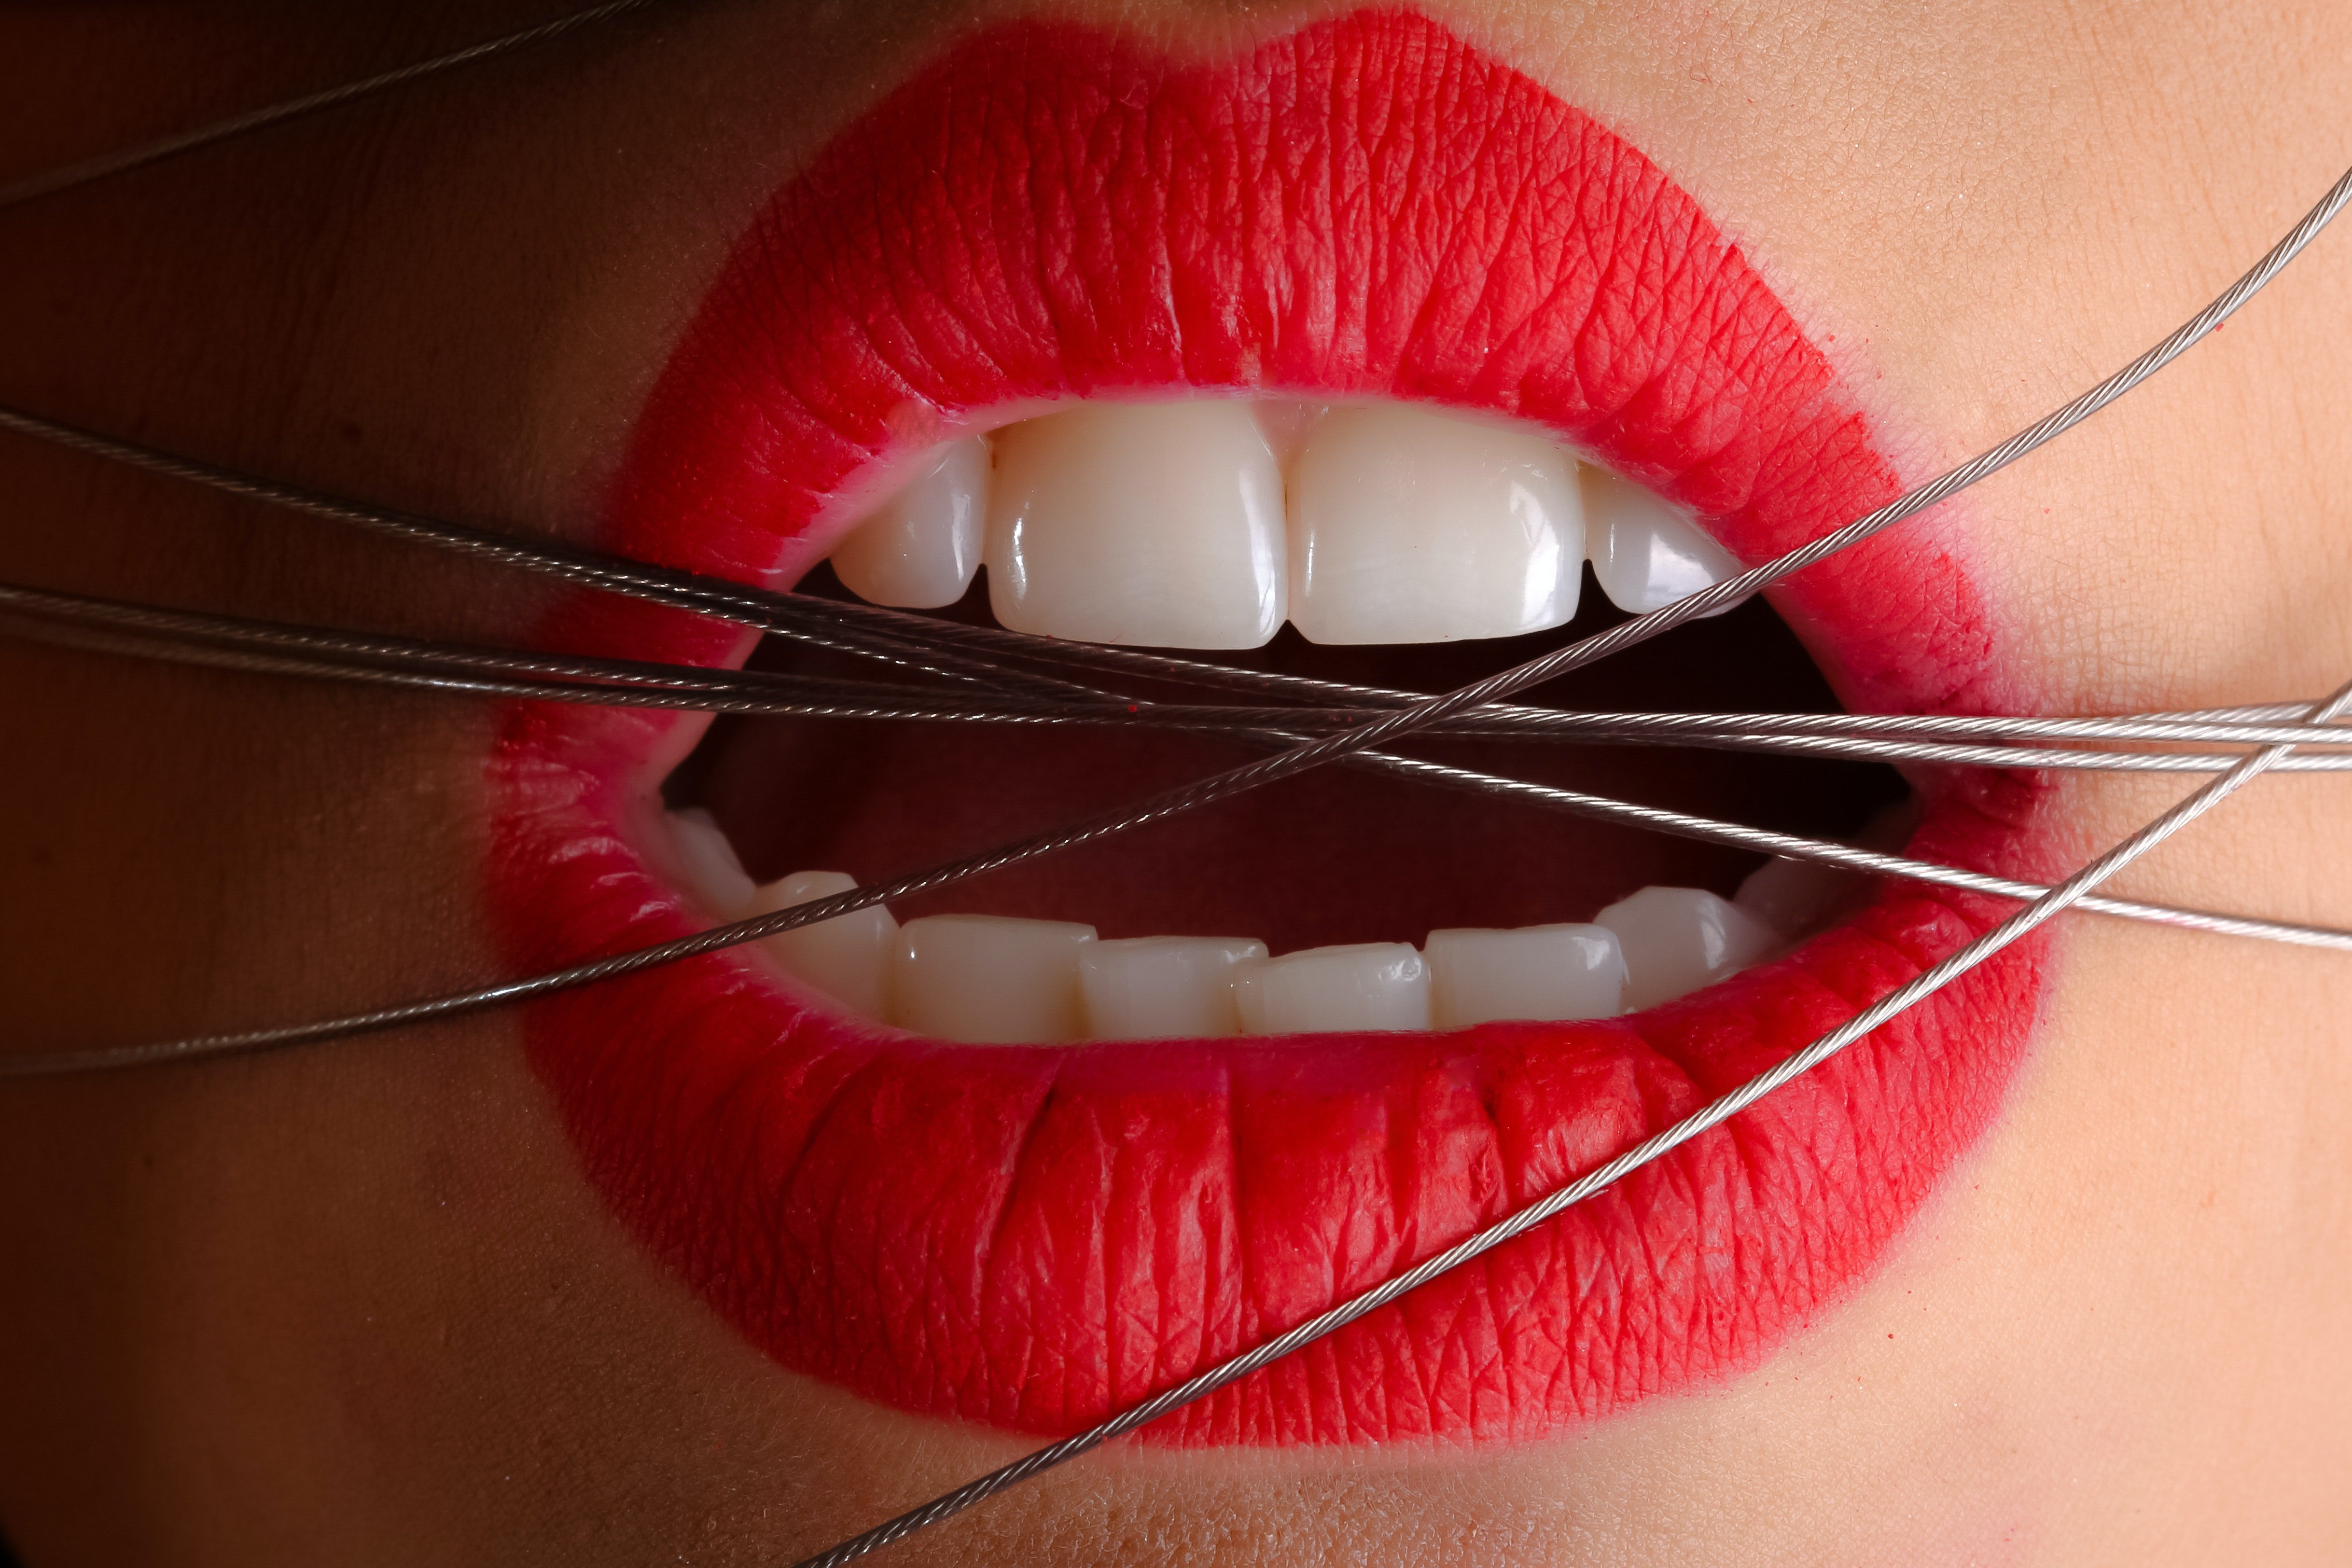 An image of a lady's teeth | Photo: Pixabay